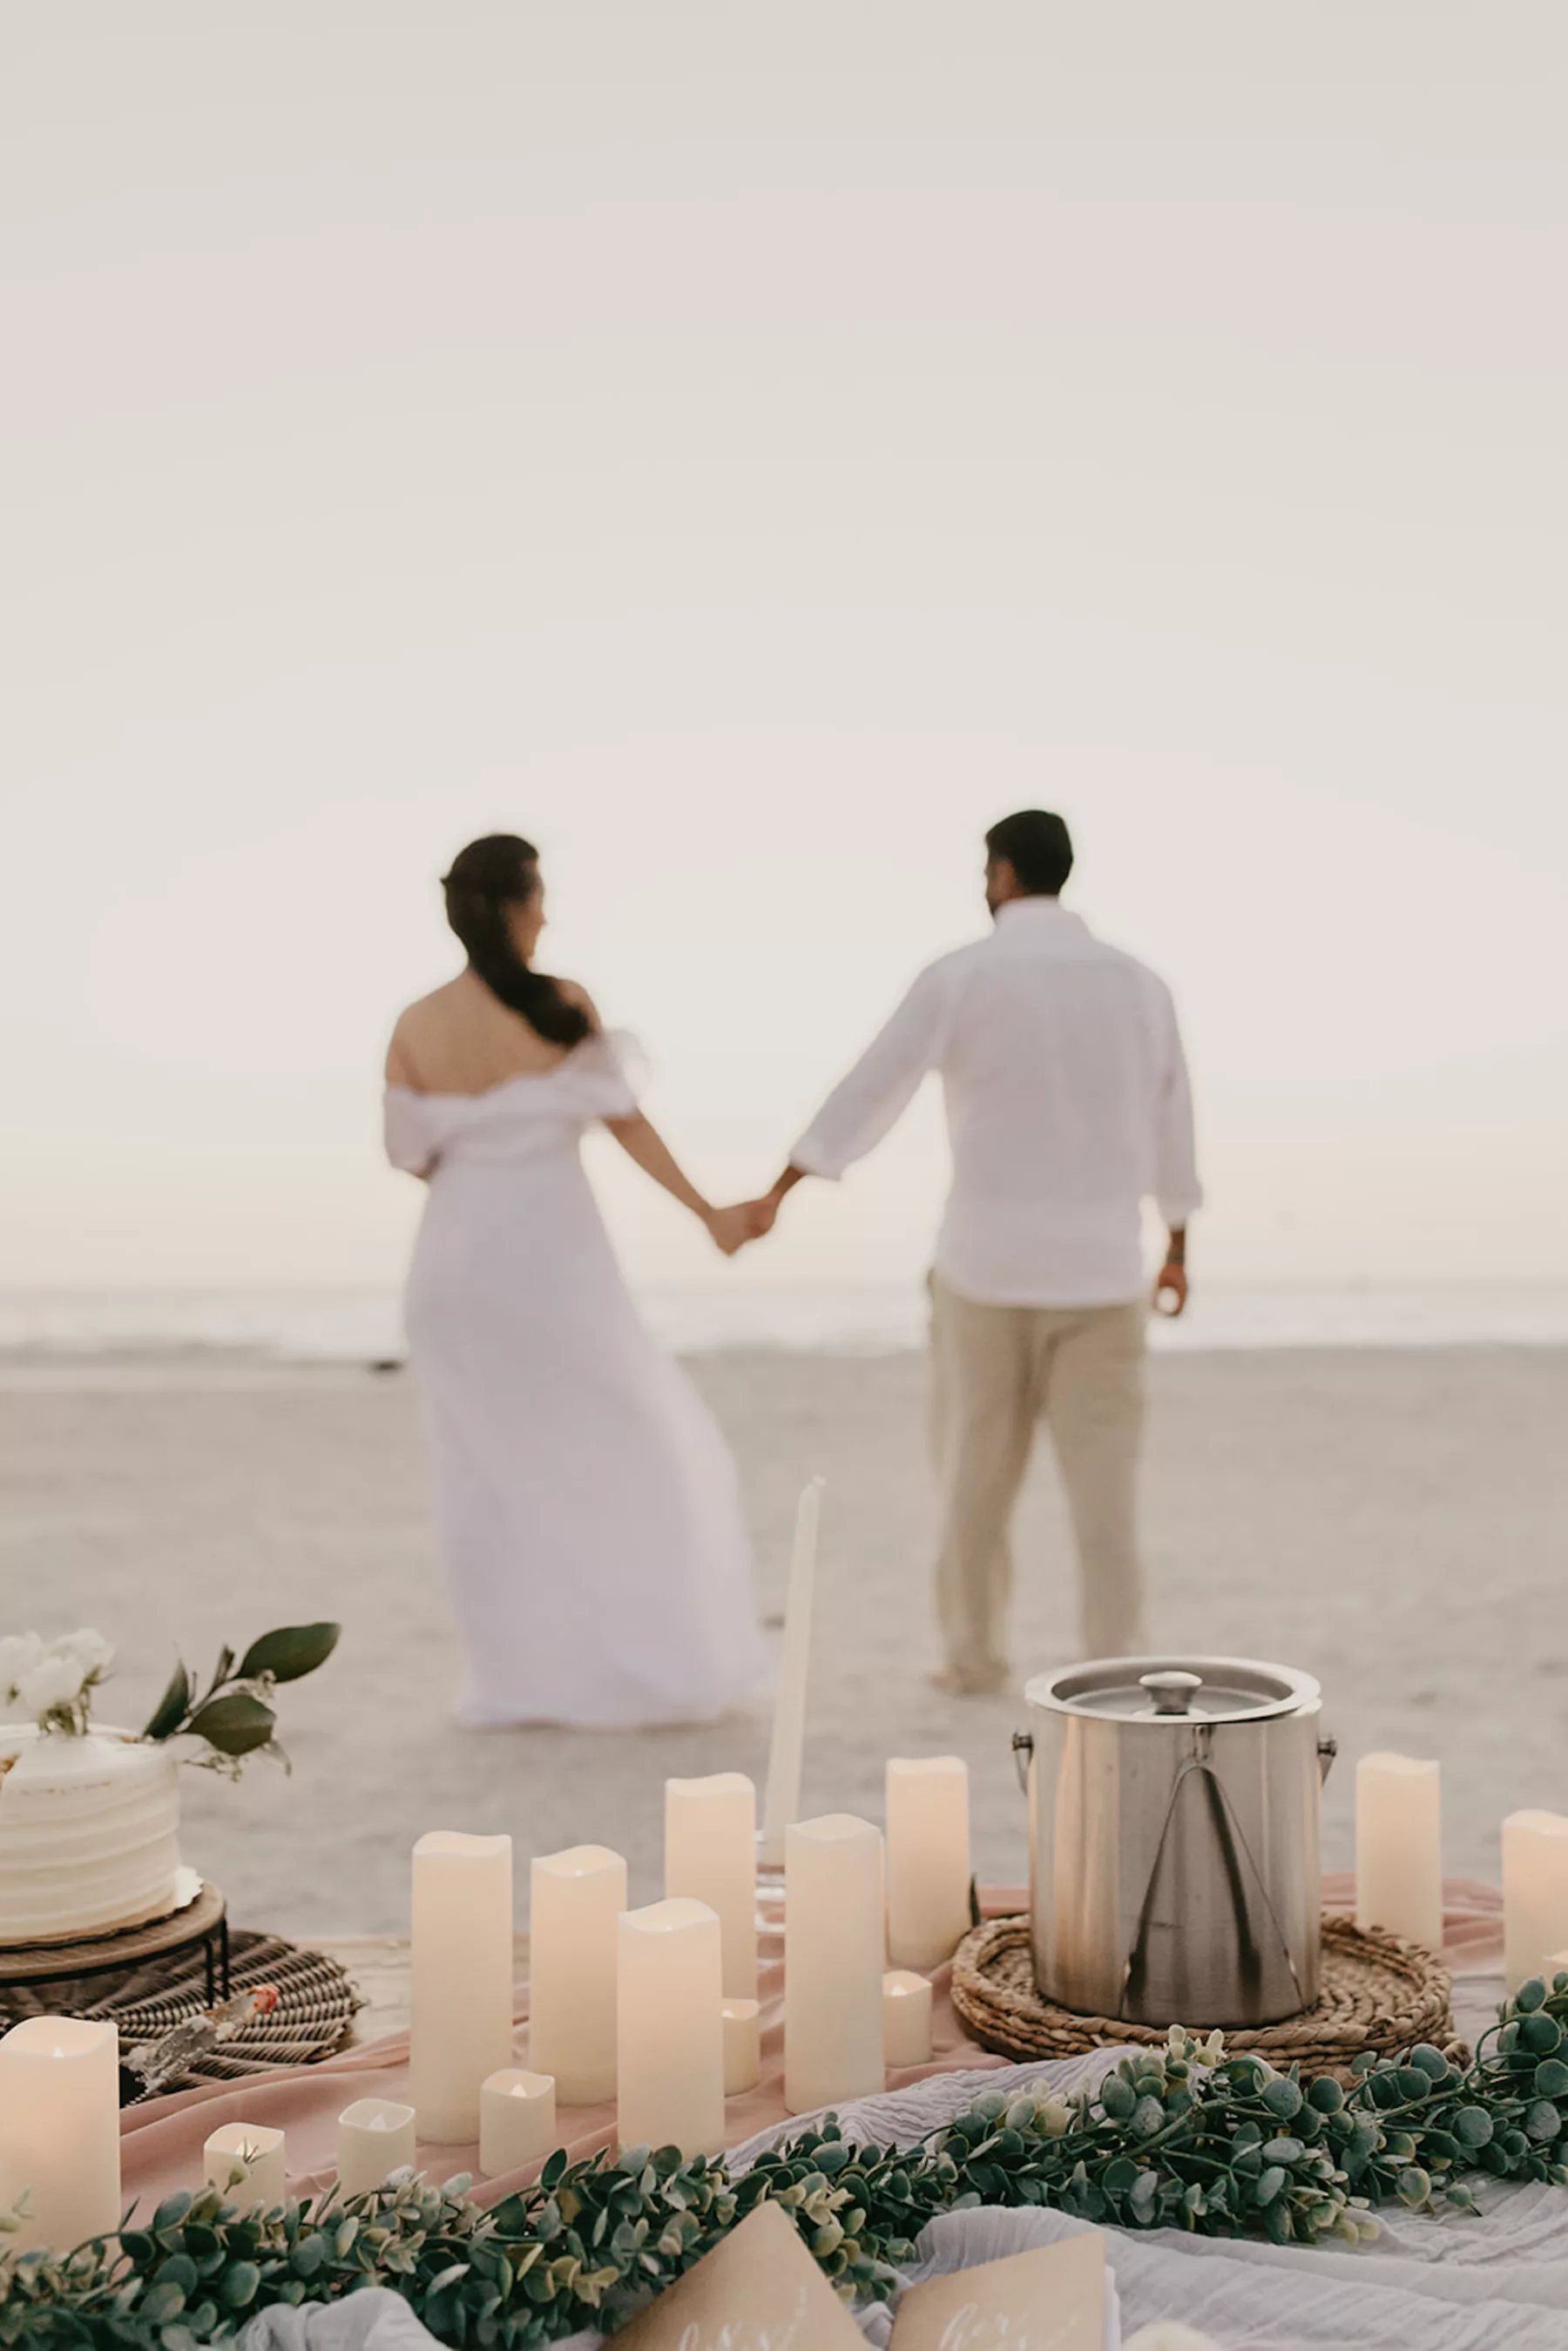 Intimate Bride and Groom Beach Wedding Elopement Decor Inspiration | Flameless Candles, Greenery Garland Ideas